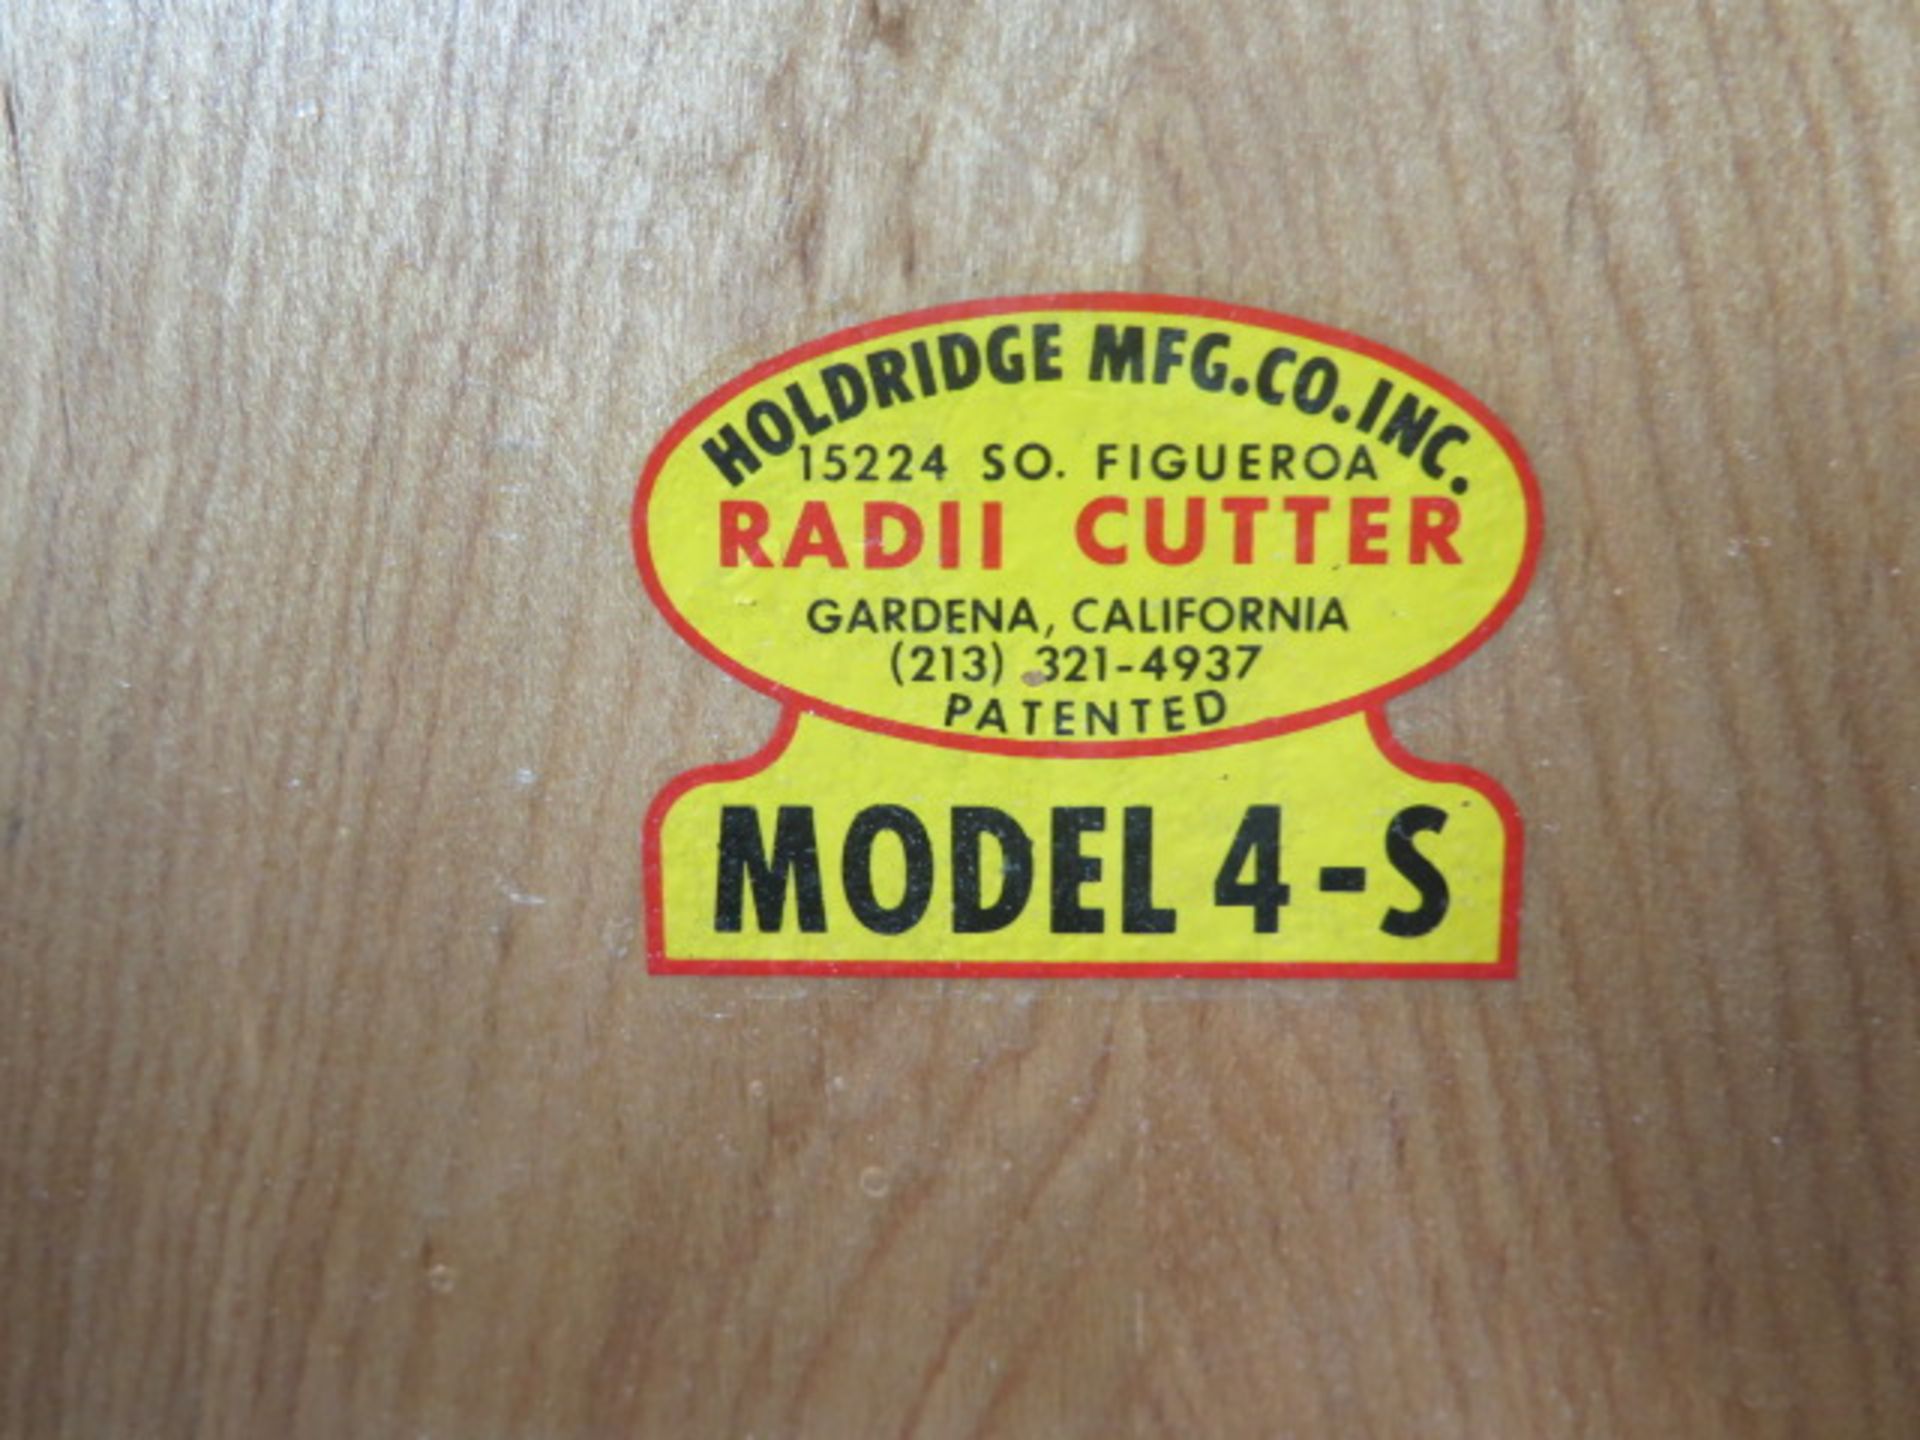 Holdridge mdl. 4-S Radaii Cutter Set - Image 3 of 3